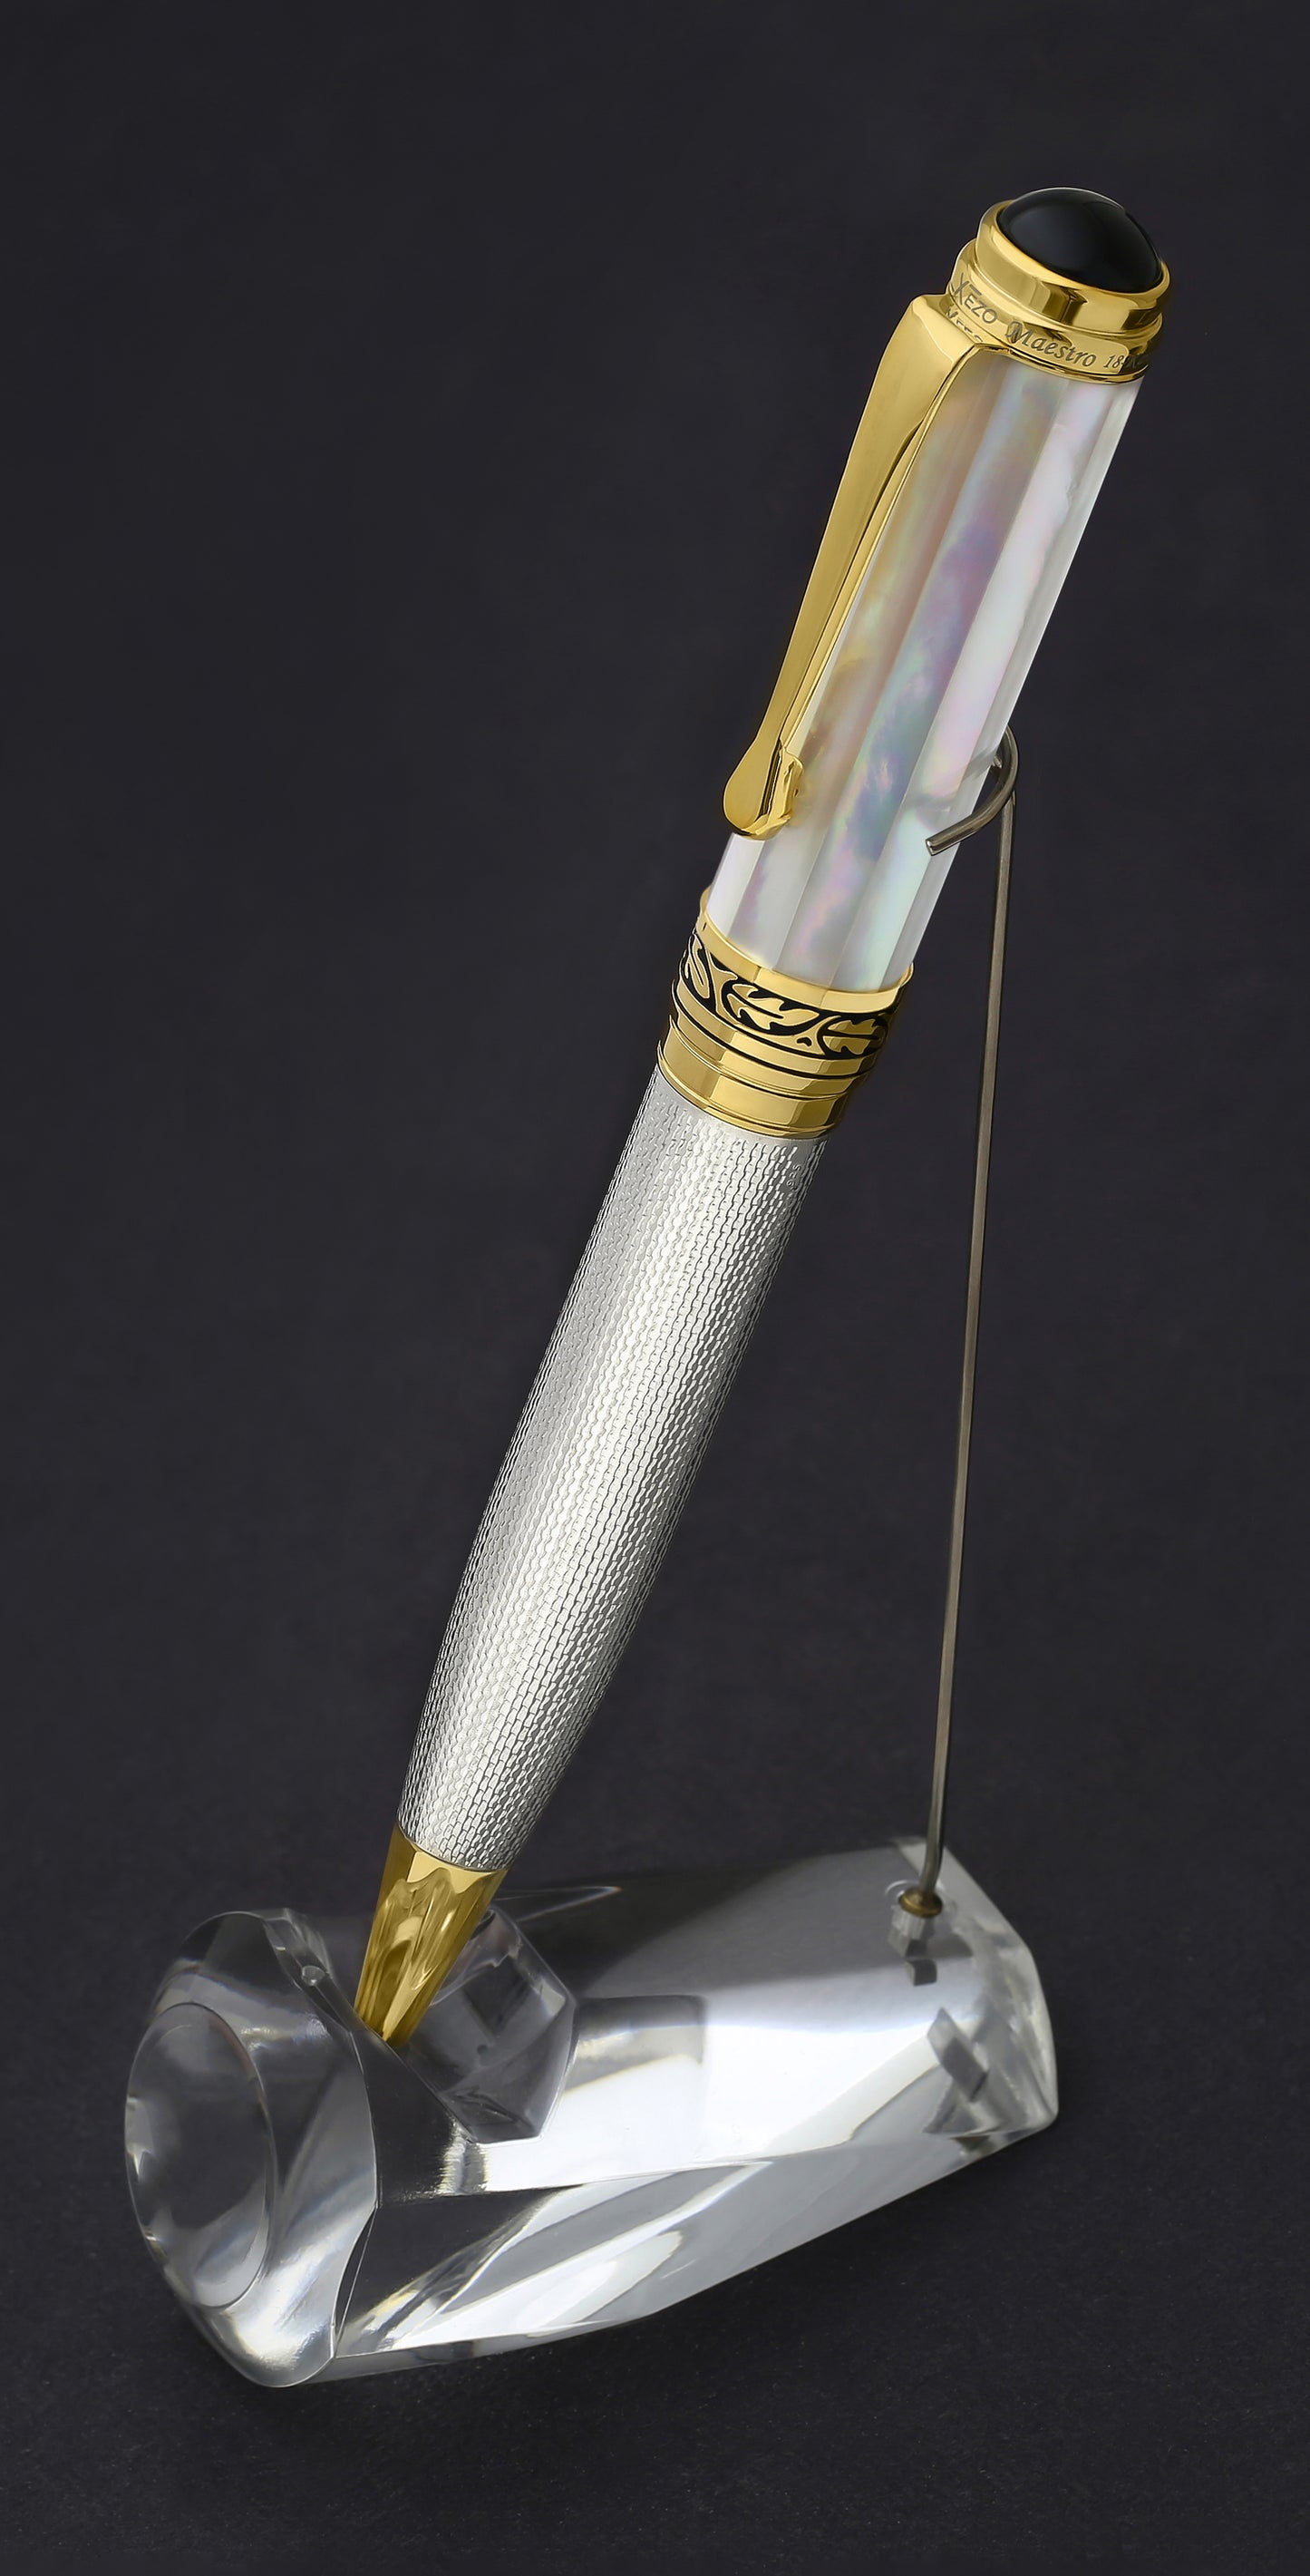 Xezo - Maestro White MOP B ballpoint pen standing on a pen holder